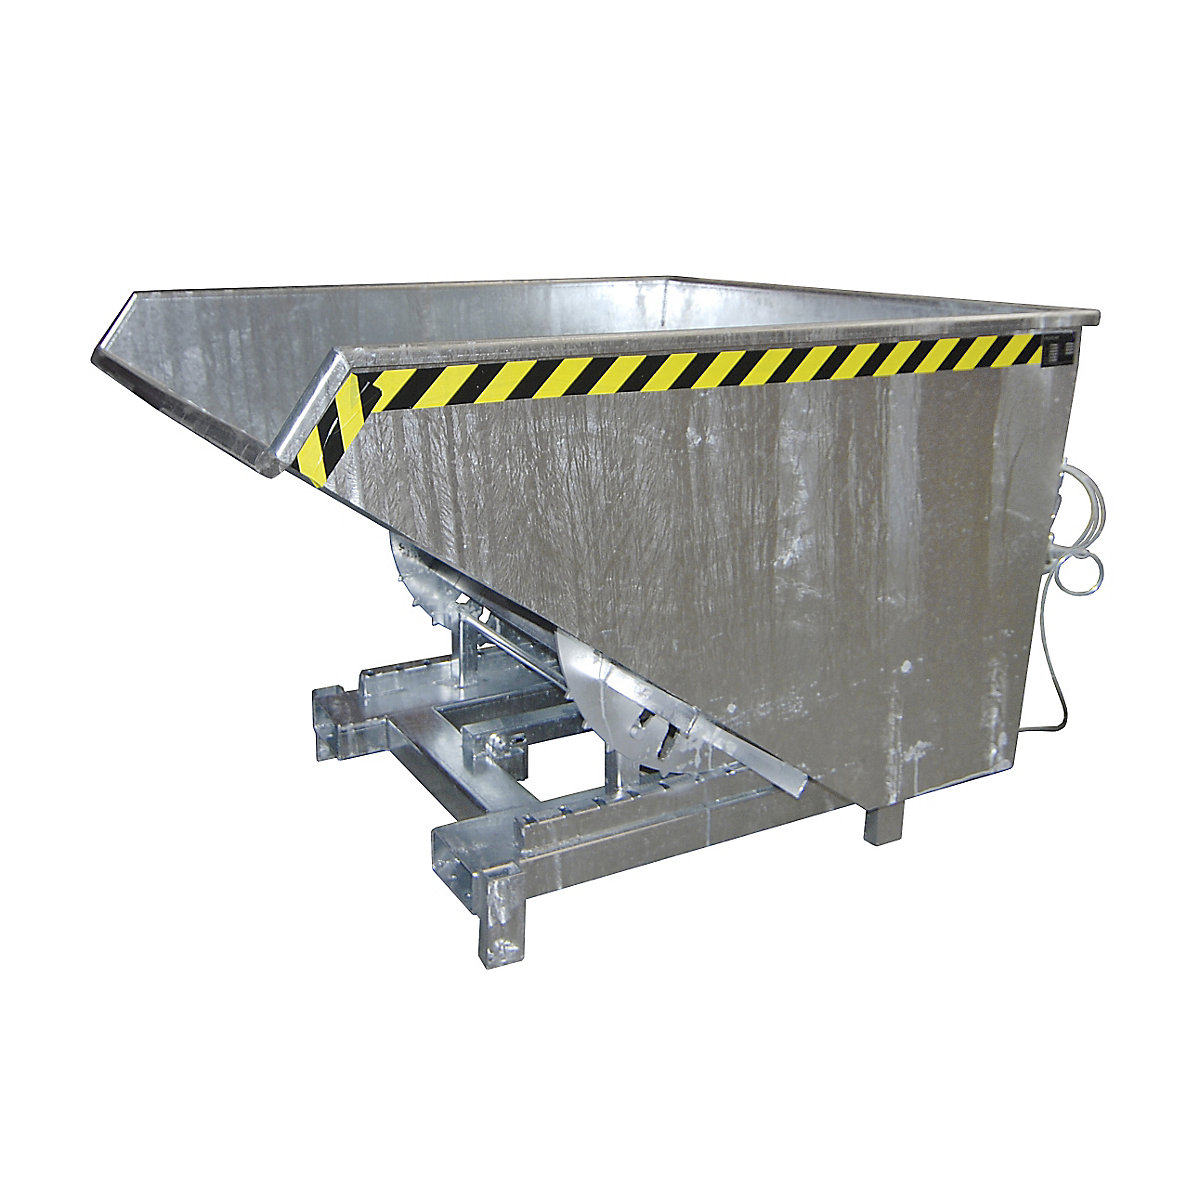 Heavy duty tilting skip – eurokraft pro, capacity 1.7 m³, max. load 4000 kg, hot dip galvanised in accordance with EN ISO 1461-11